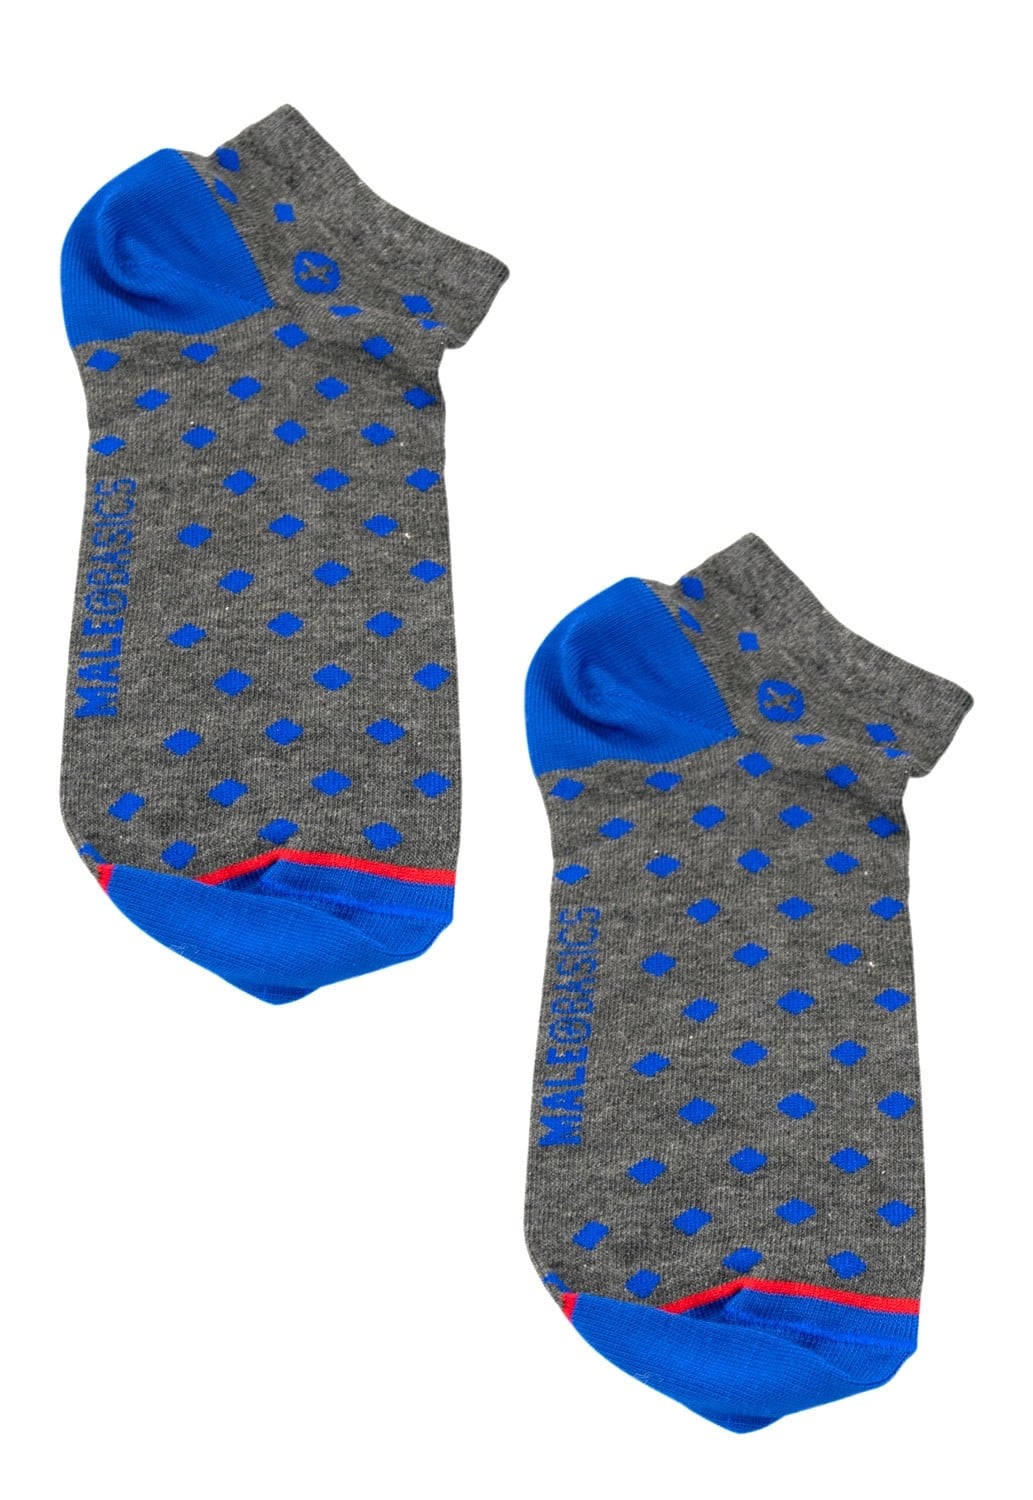 MaleBasics Ankle Socks - Rombos